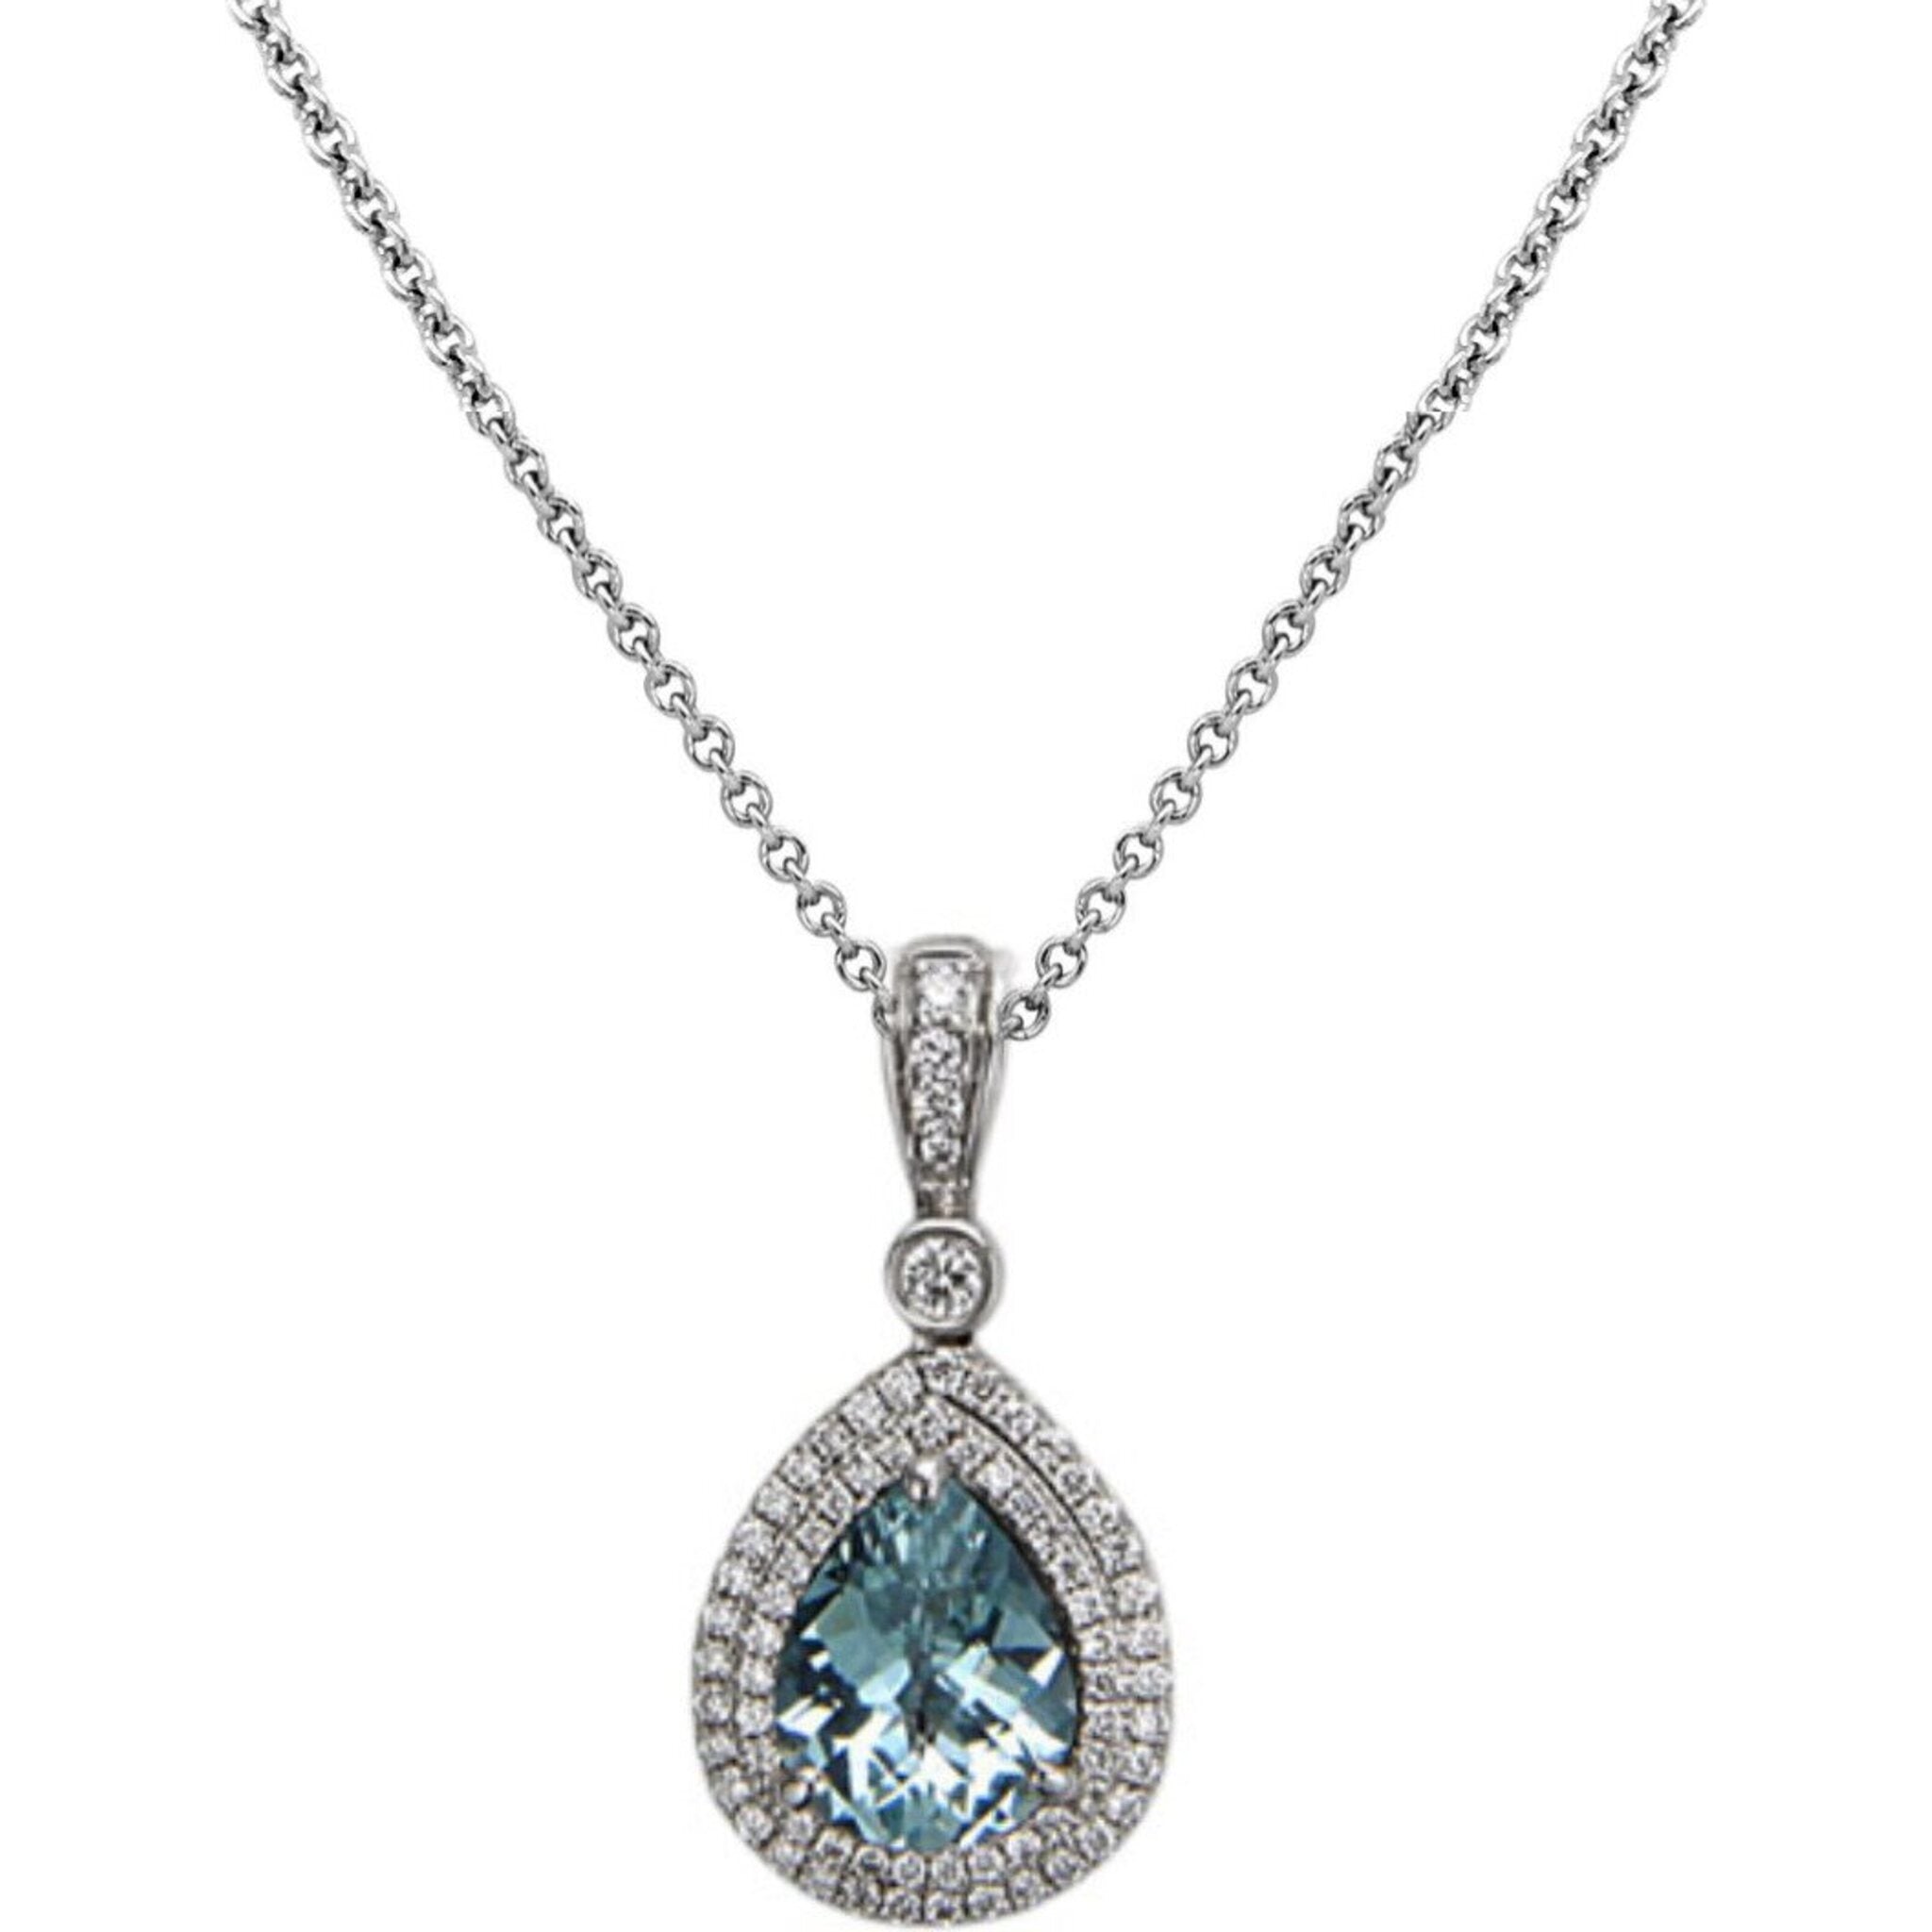 Charles Krypell - Pastel Diamond Double Halo Pear-Shape Reversible Necklace - Aquamarine